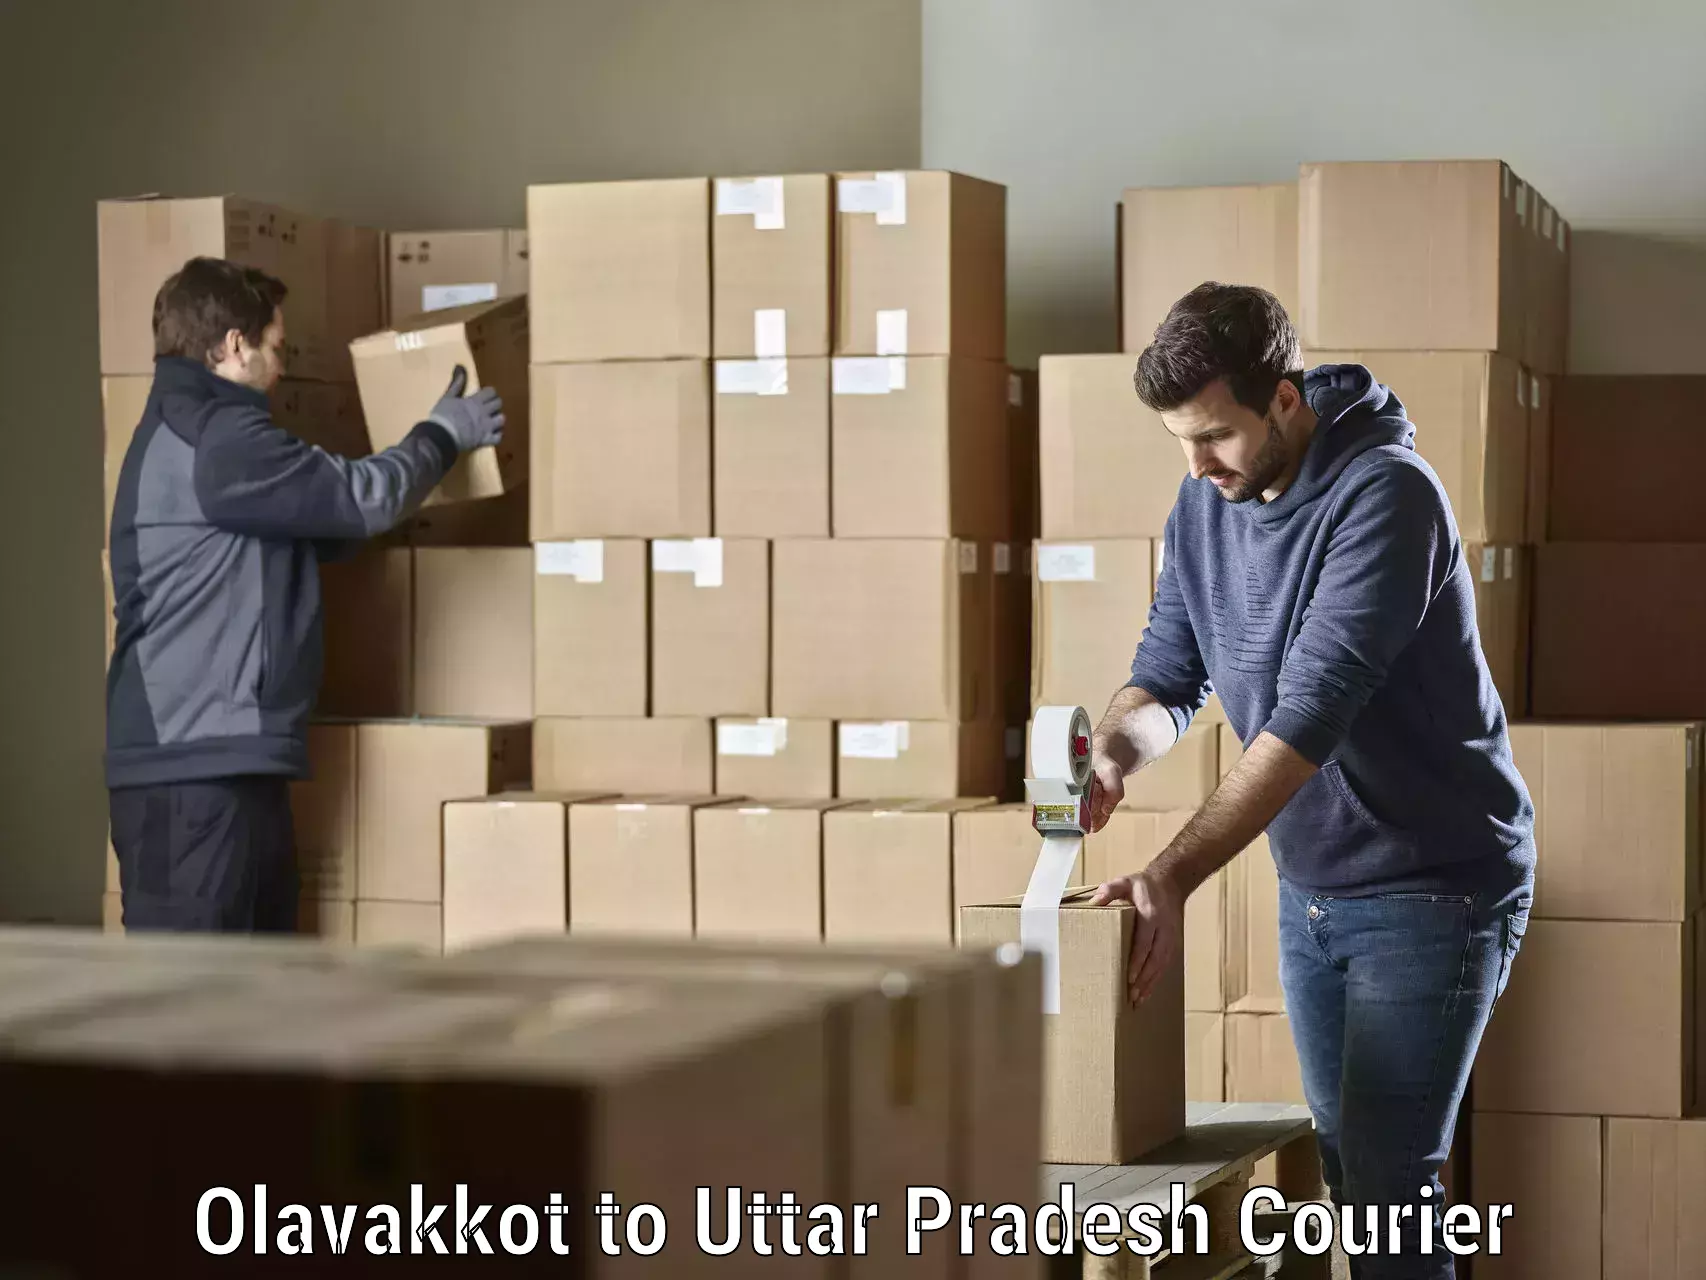 Professional courier handling Olavakkot to Bansi